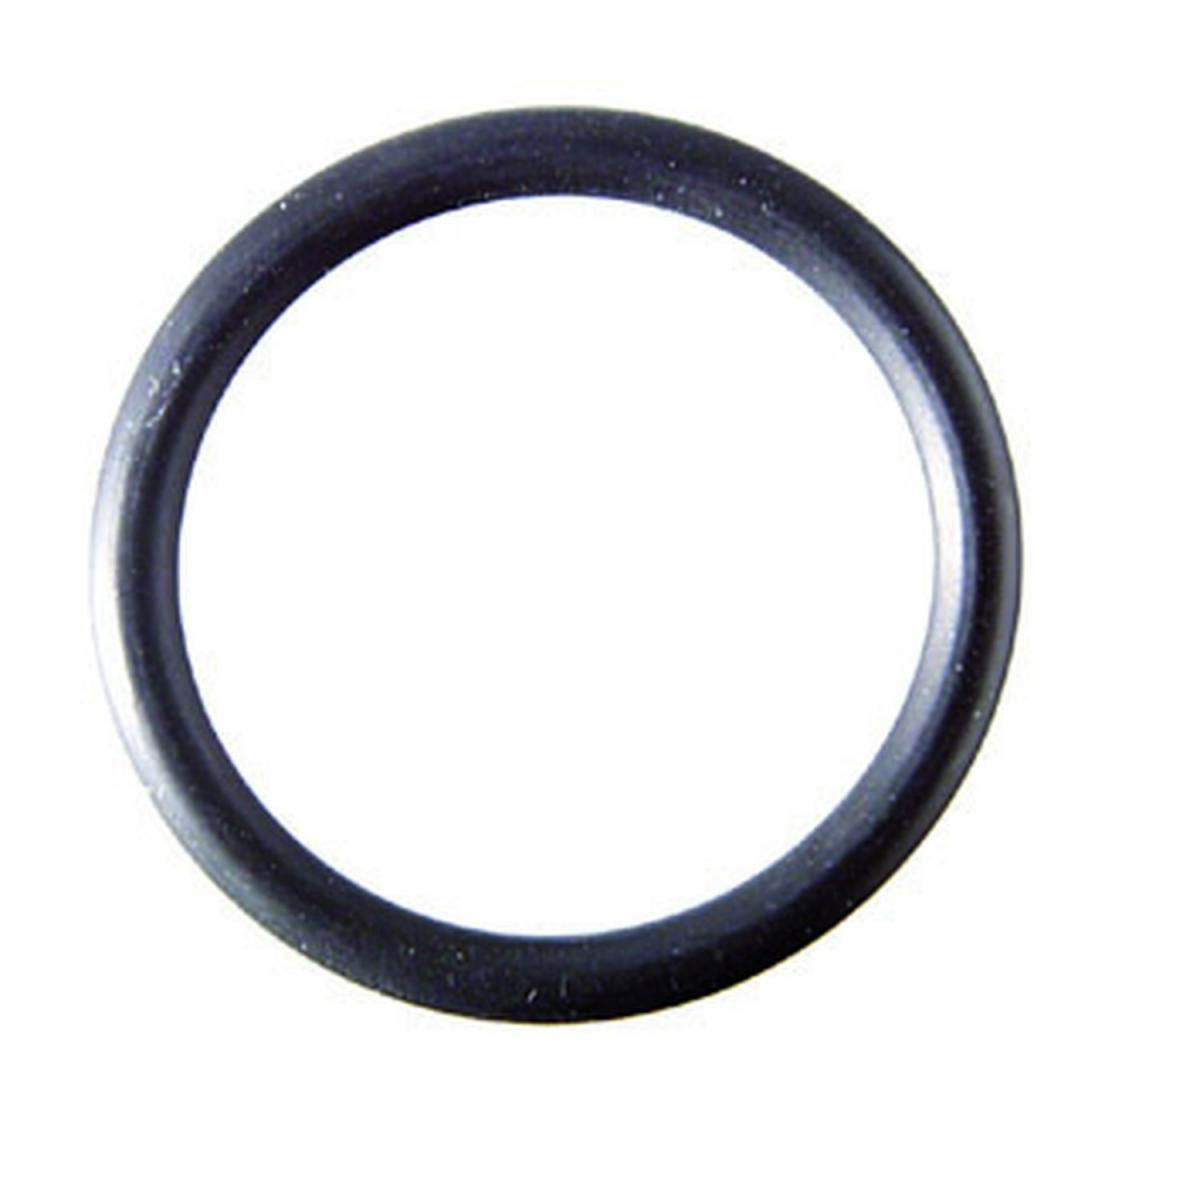 O-Ring Dichtung, für Verschraubungen, 25 mm